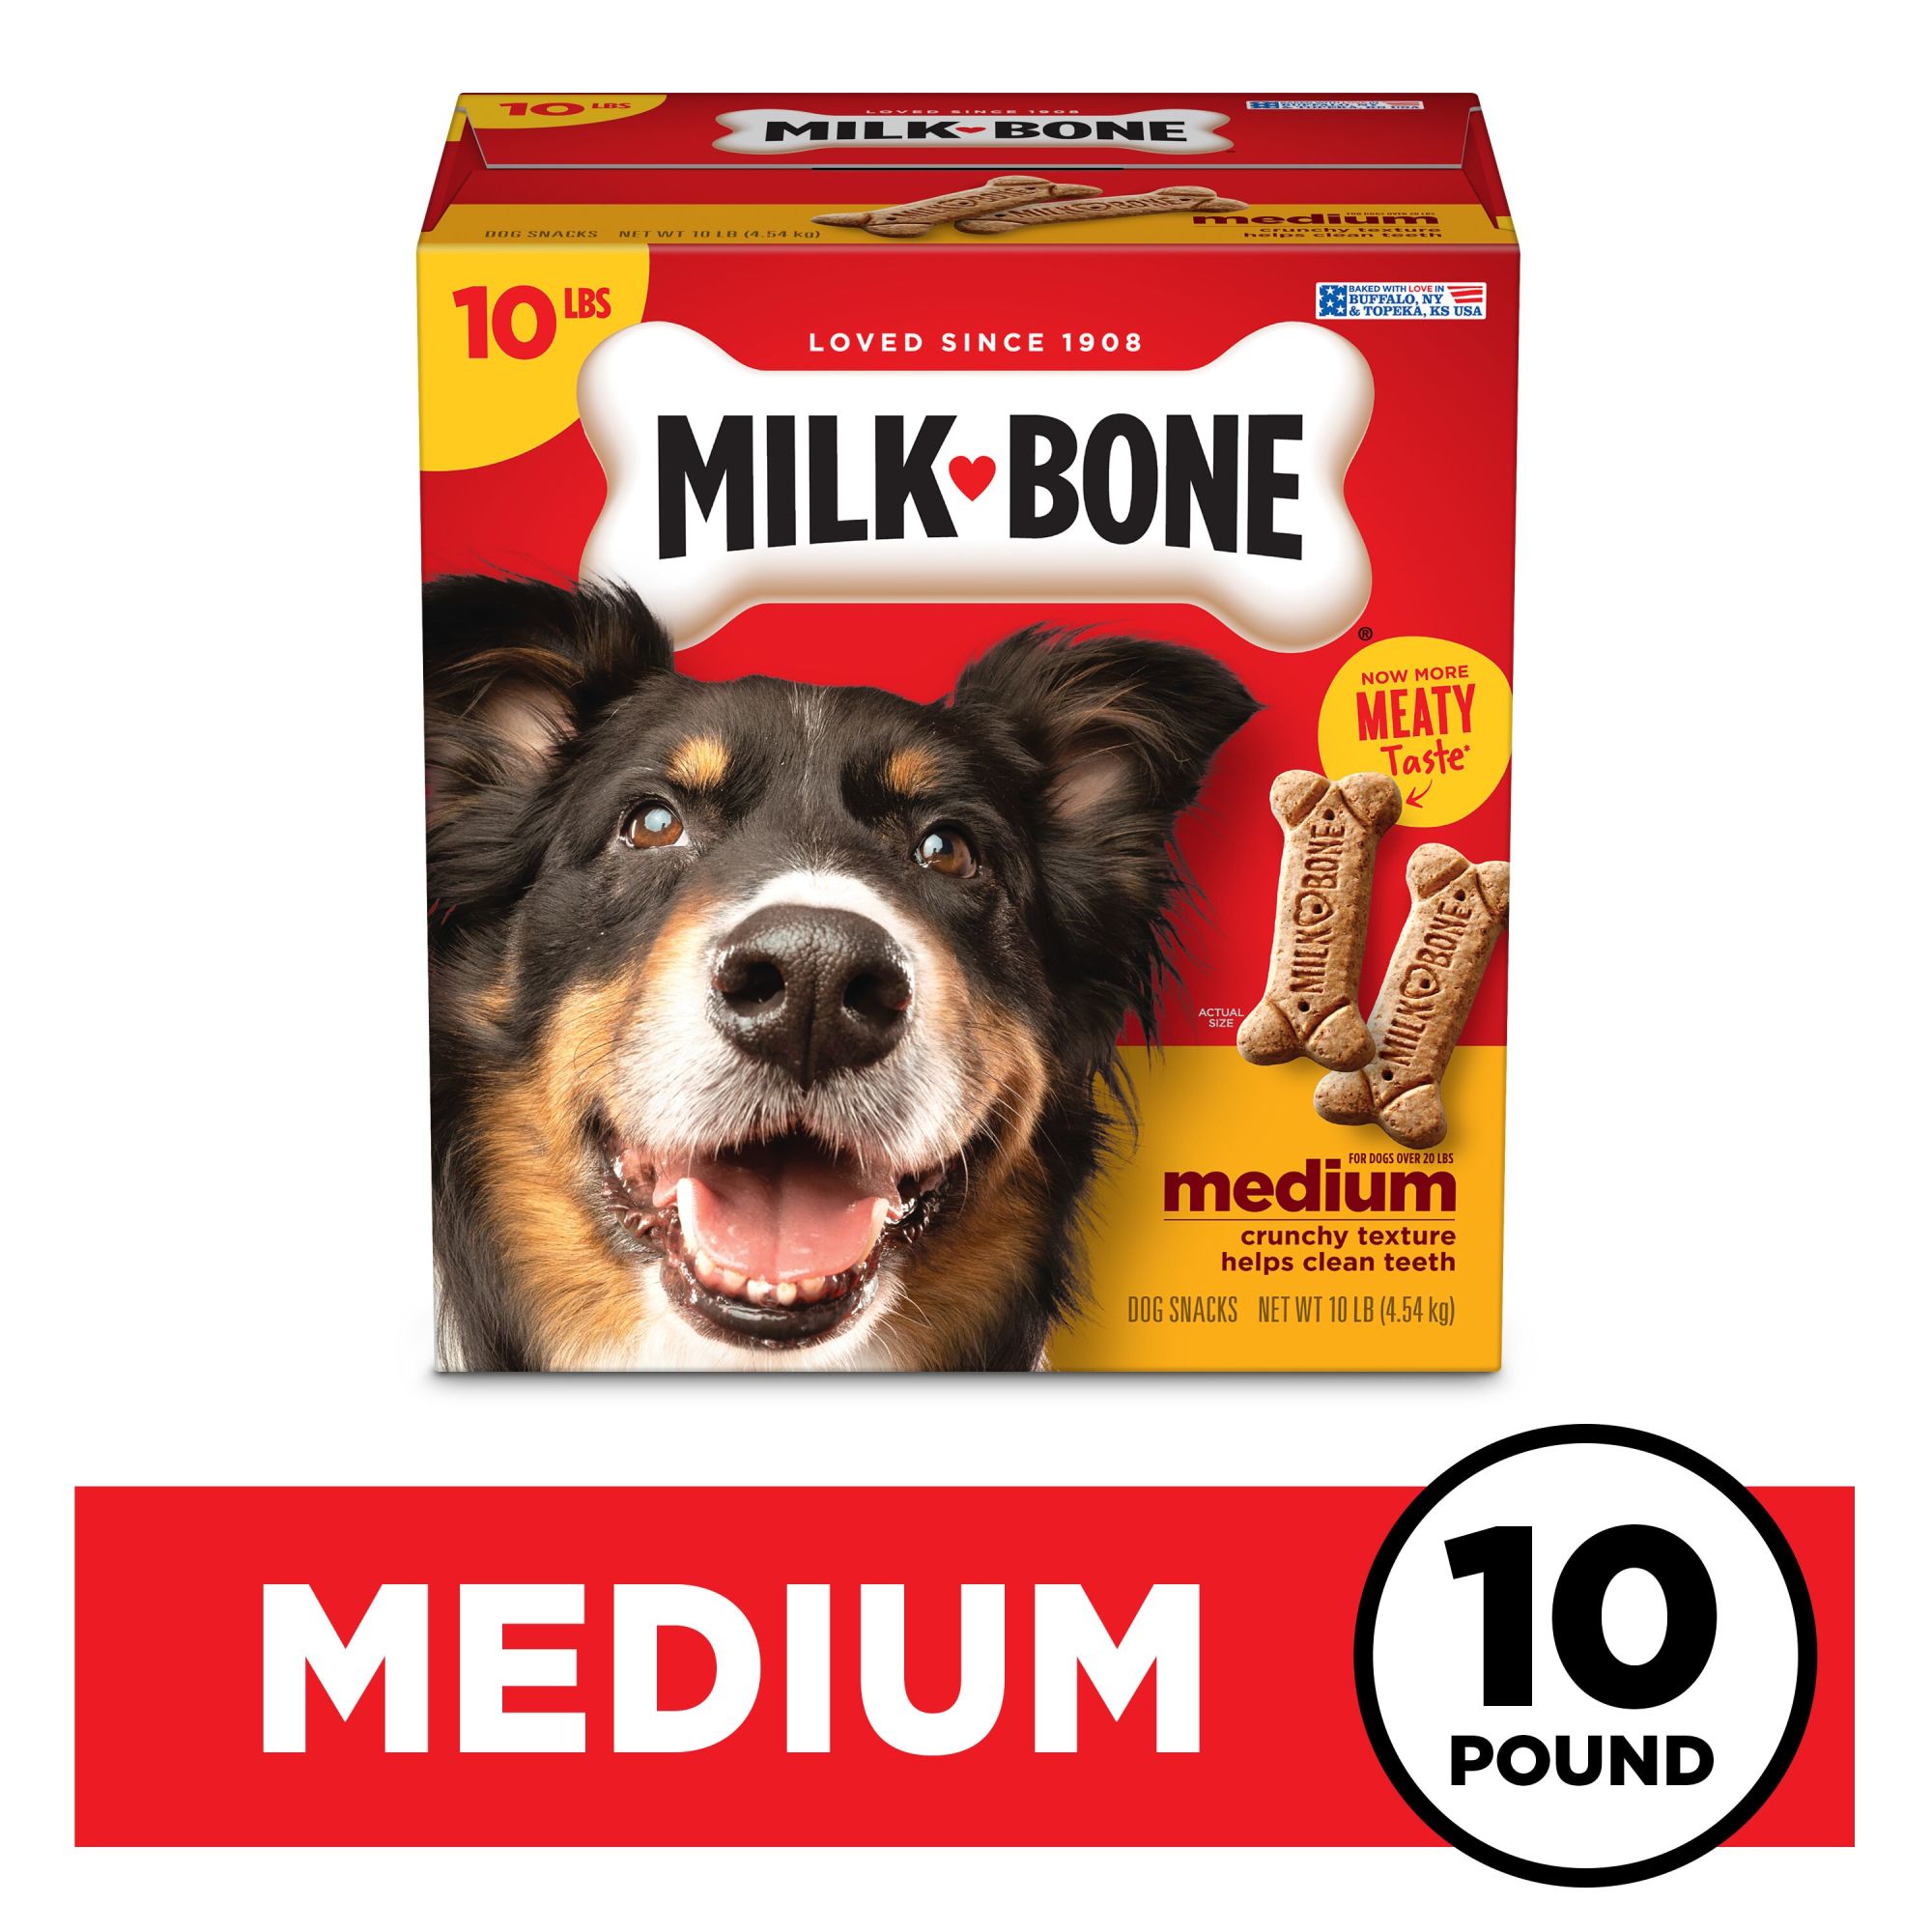 Milk-Bone Original Dog Biscuits, Medium Crunchy Dog Treats, 10 lbs. - image 3 of 10